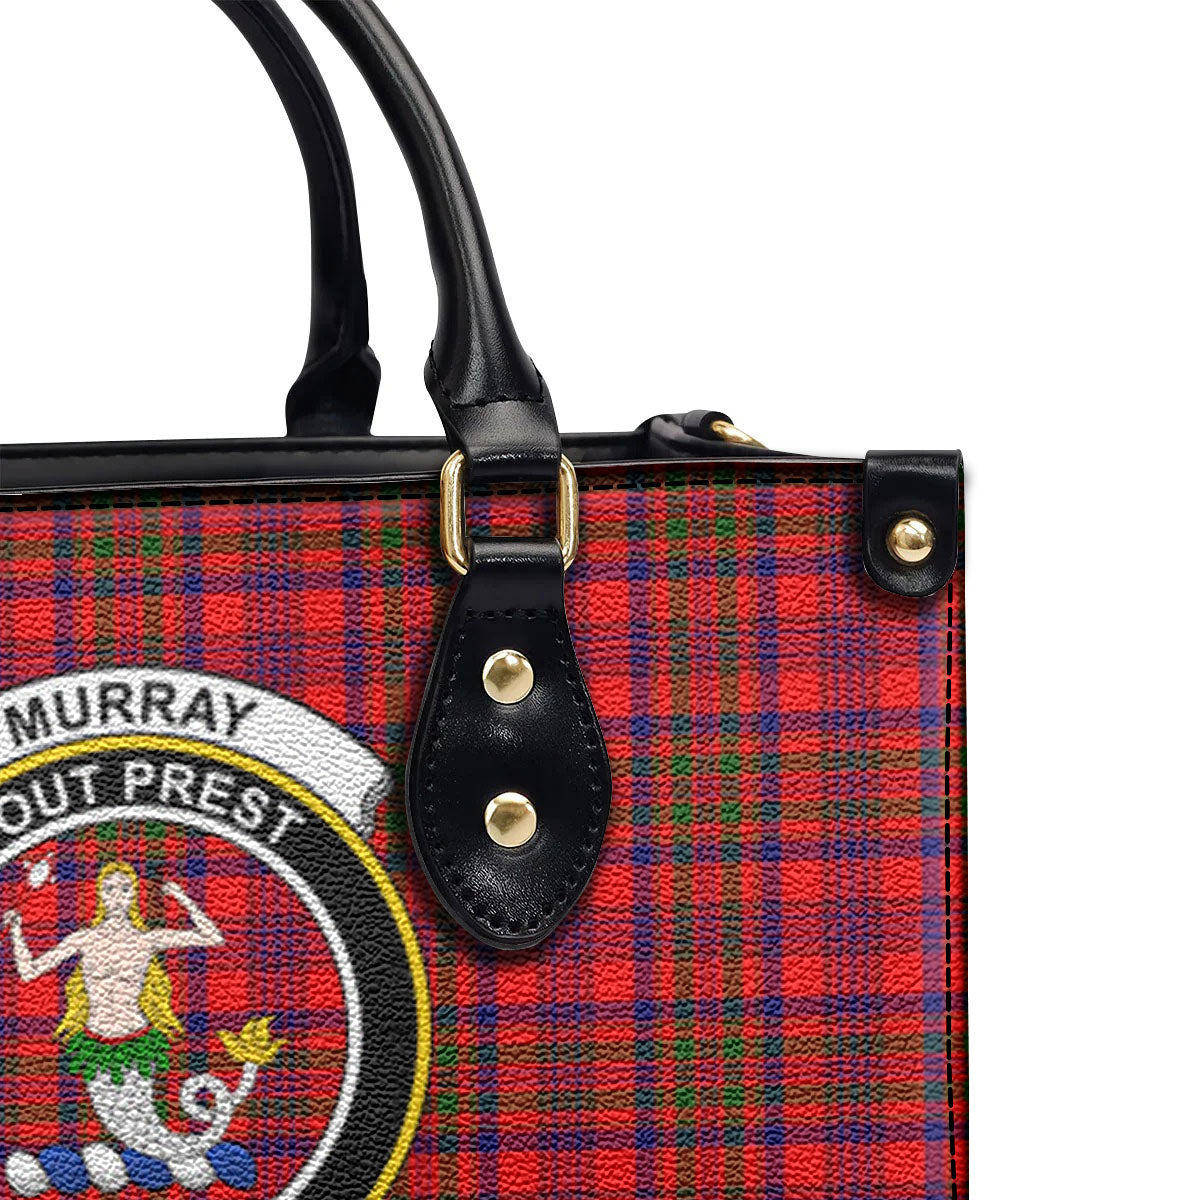 Murray (of Dysart) Tartan Crest Leather Handbag